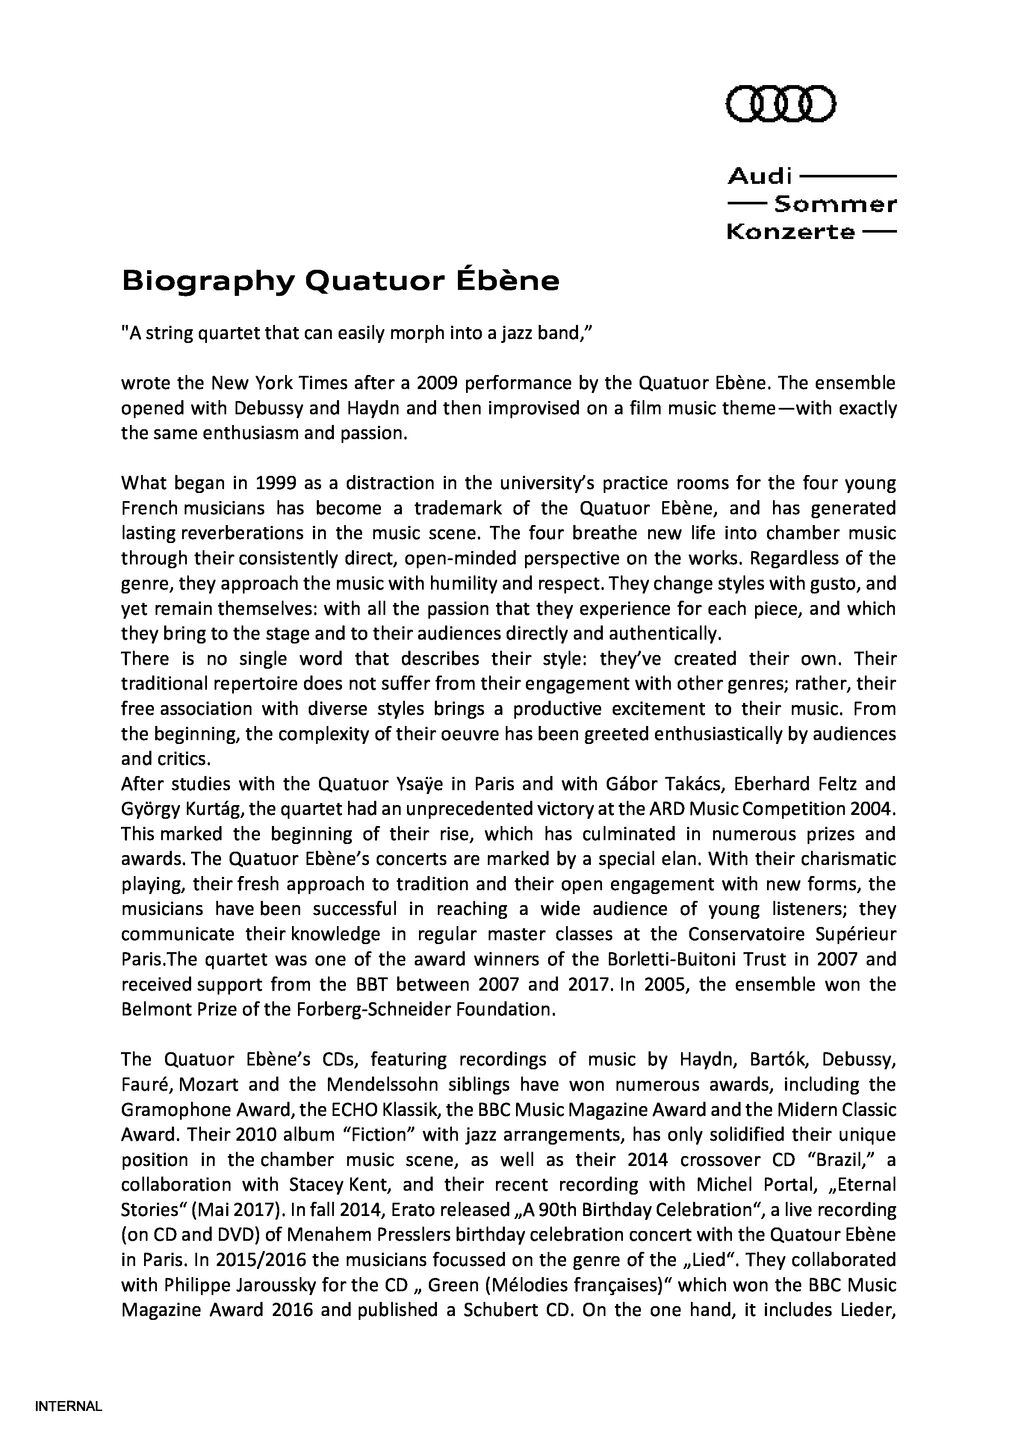 Biography Quatuor Ébène